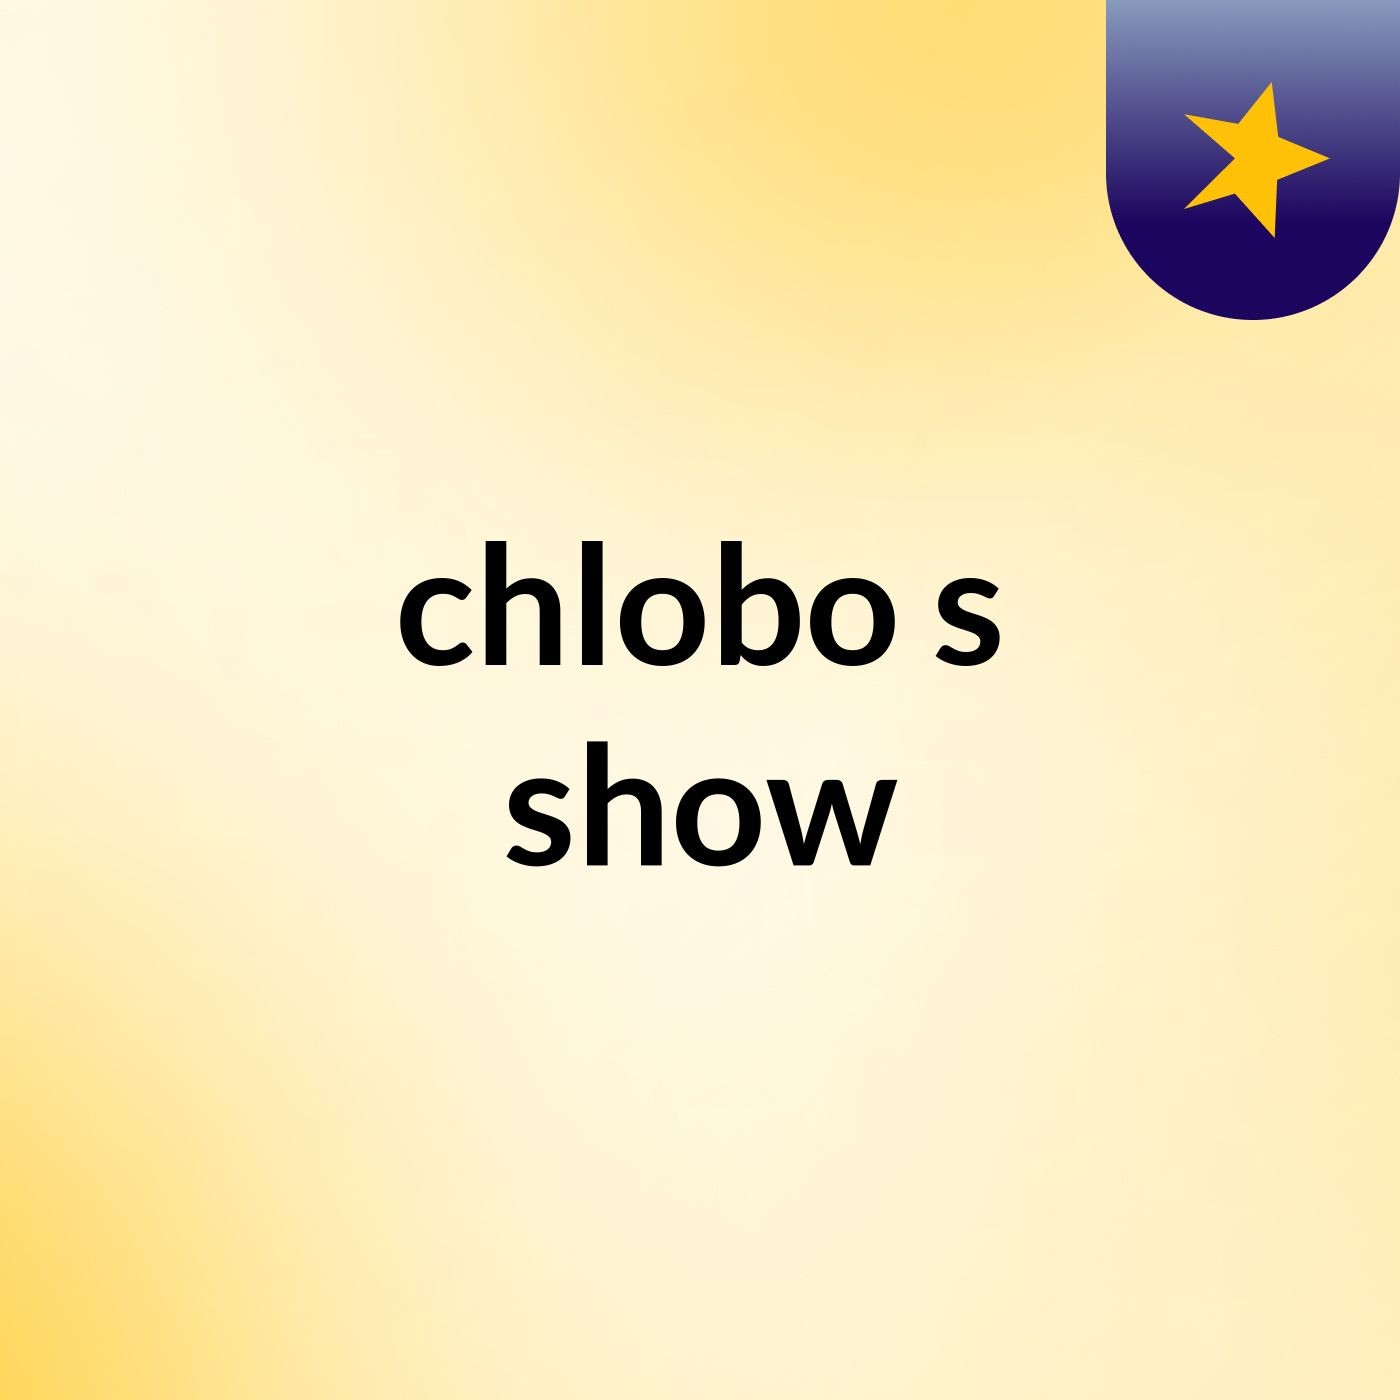 chlobo's show